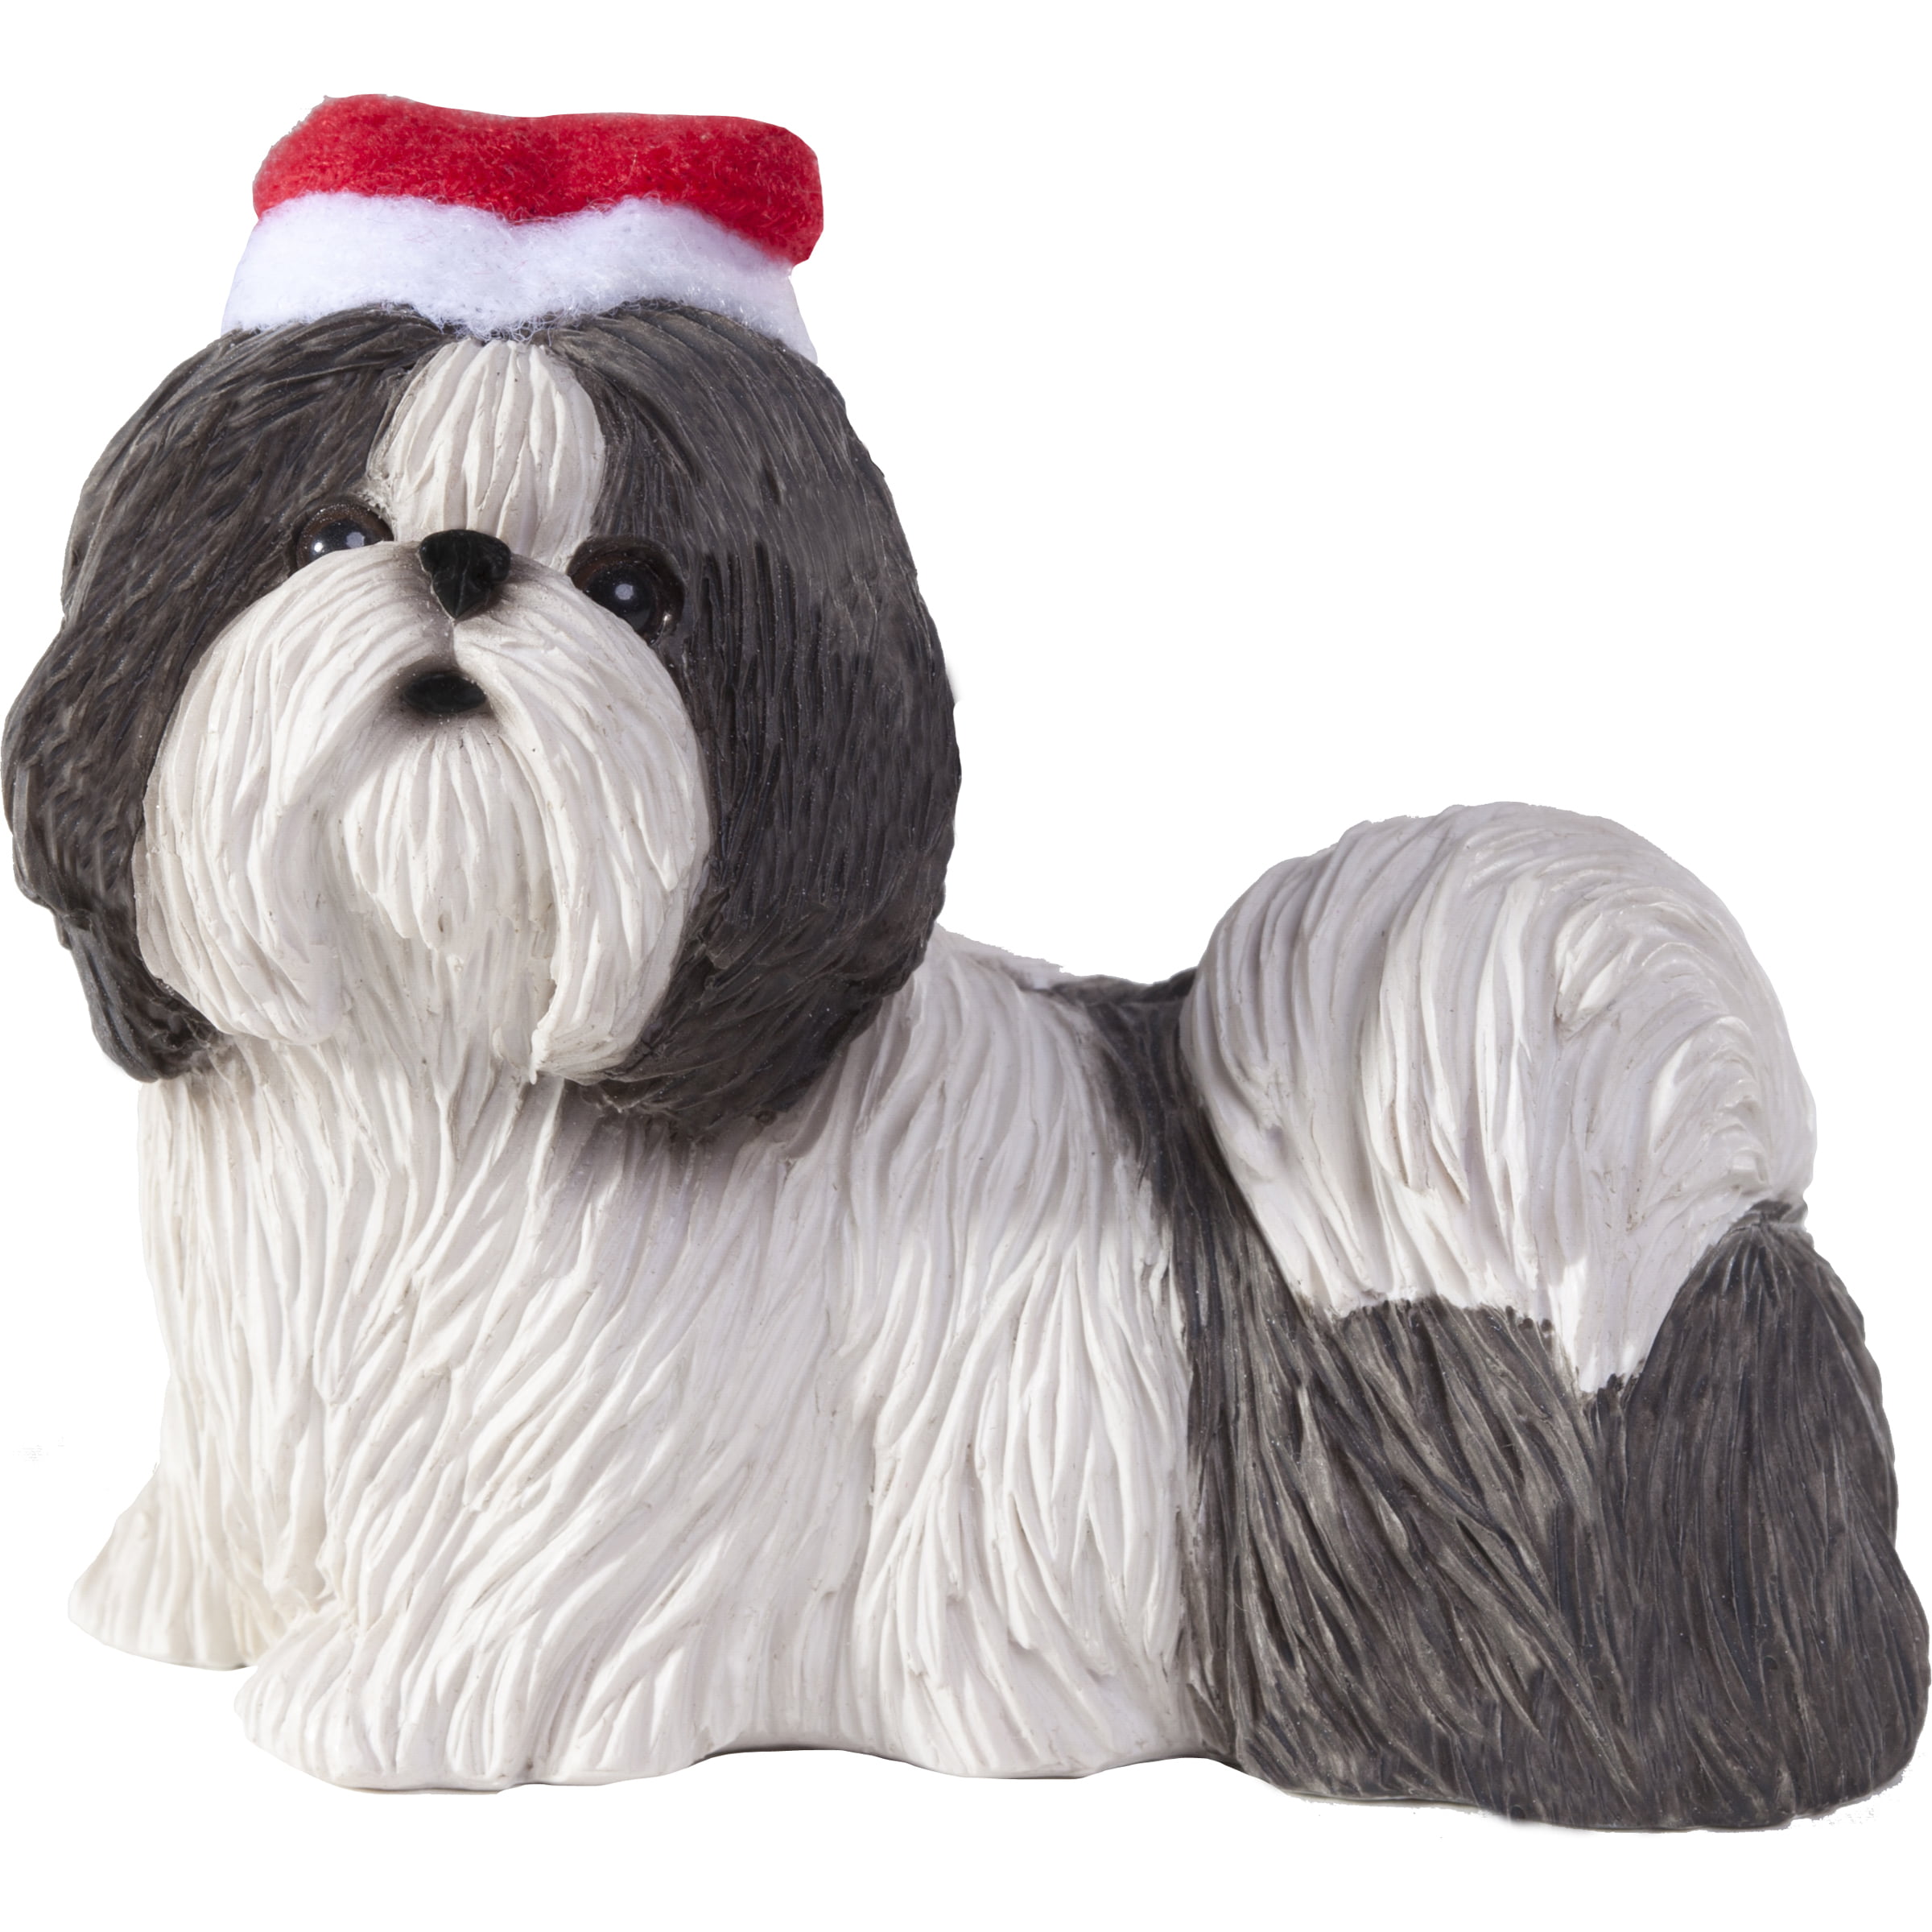 Shih Tzu Dog Collection Holiday Christmas Ball Ornament Dogs Animals Artlist